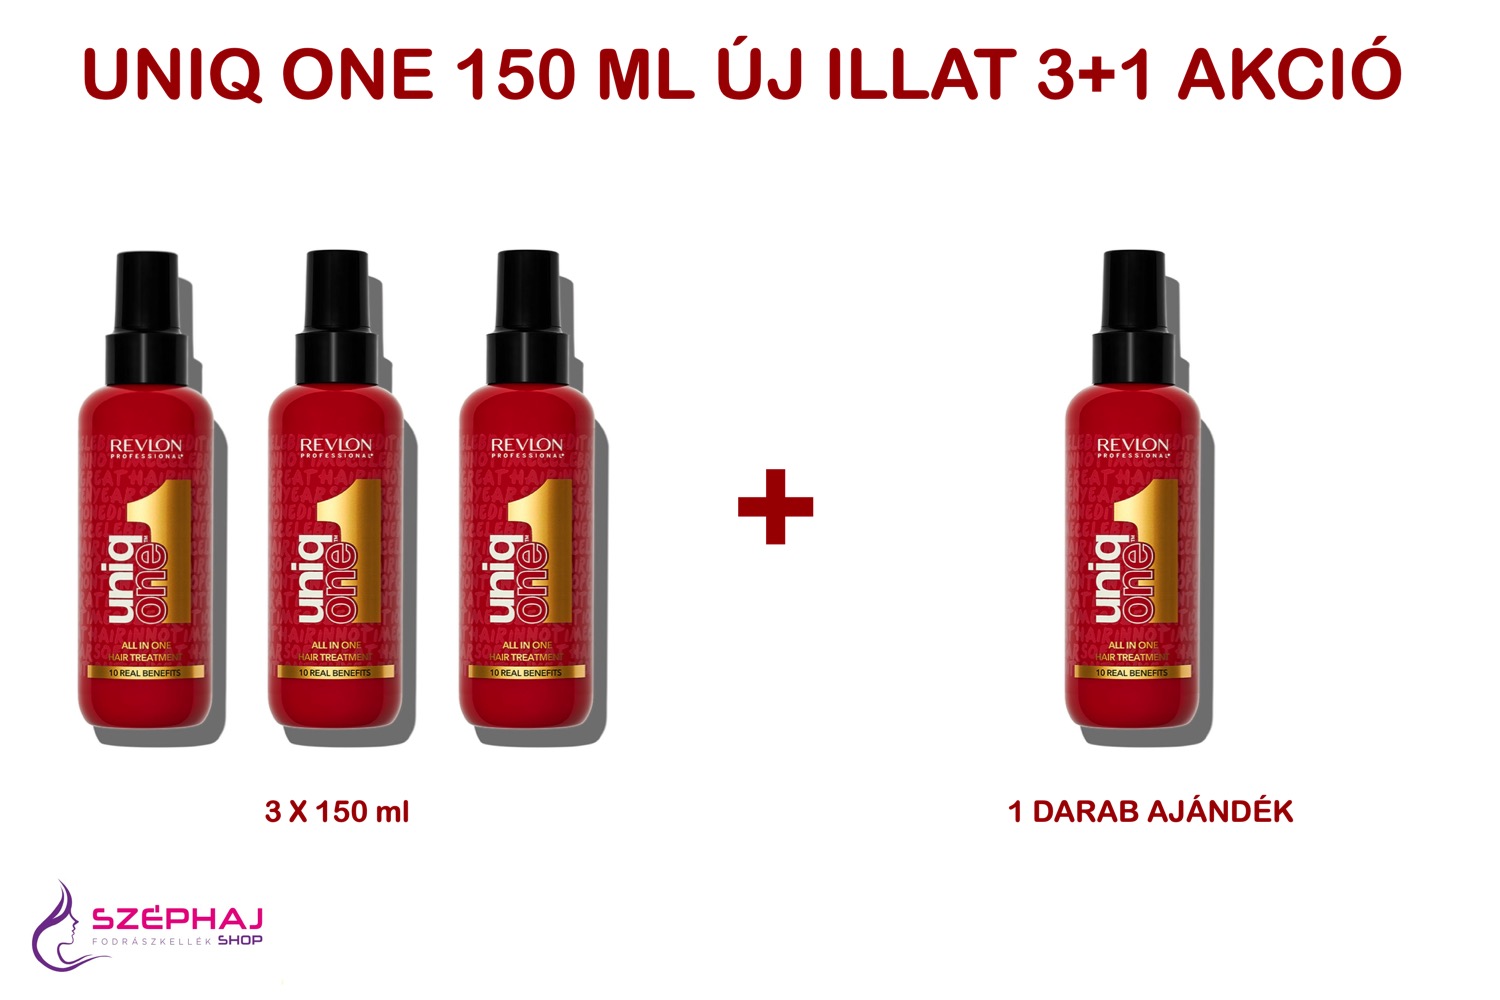 Uniq One 150 ml - All in one hair treatment - NEW FRAGRANCE 150 ml 3+1 AKCIÓ